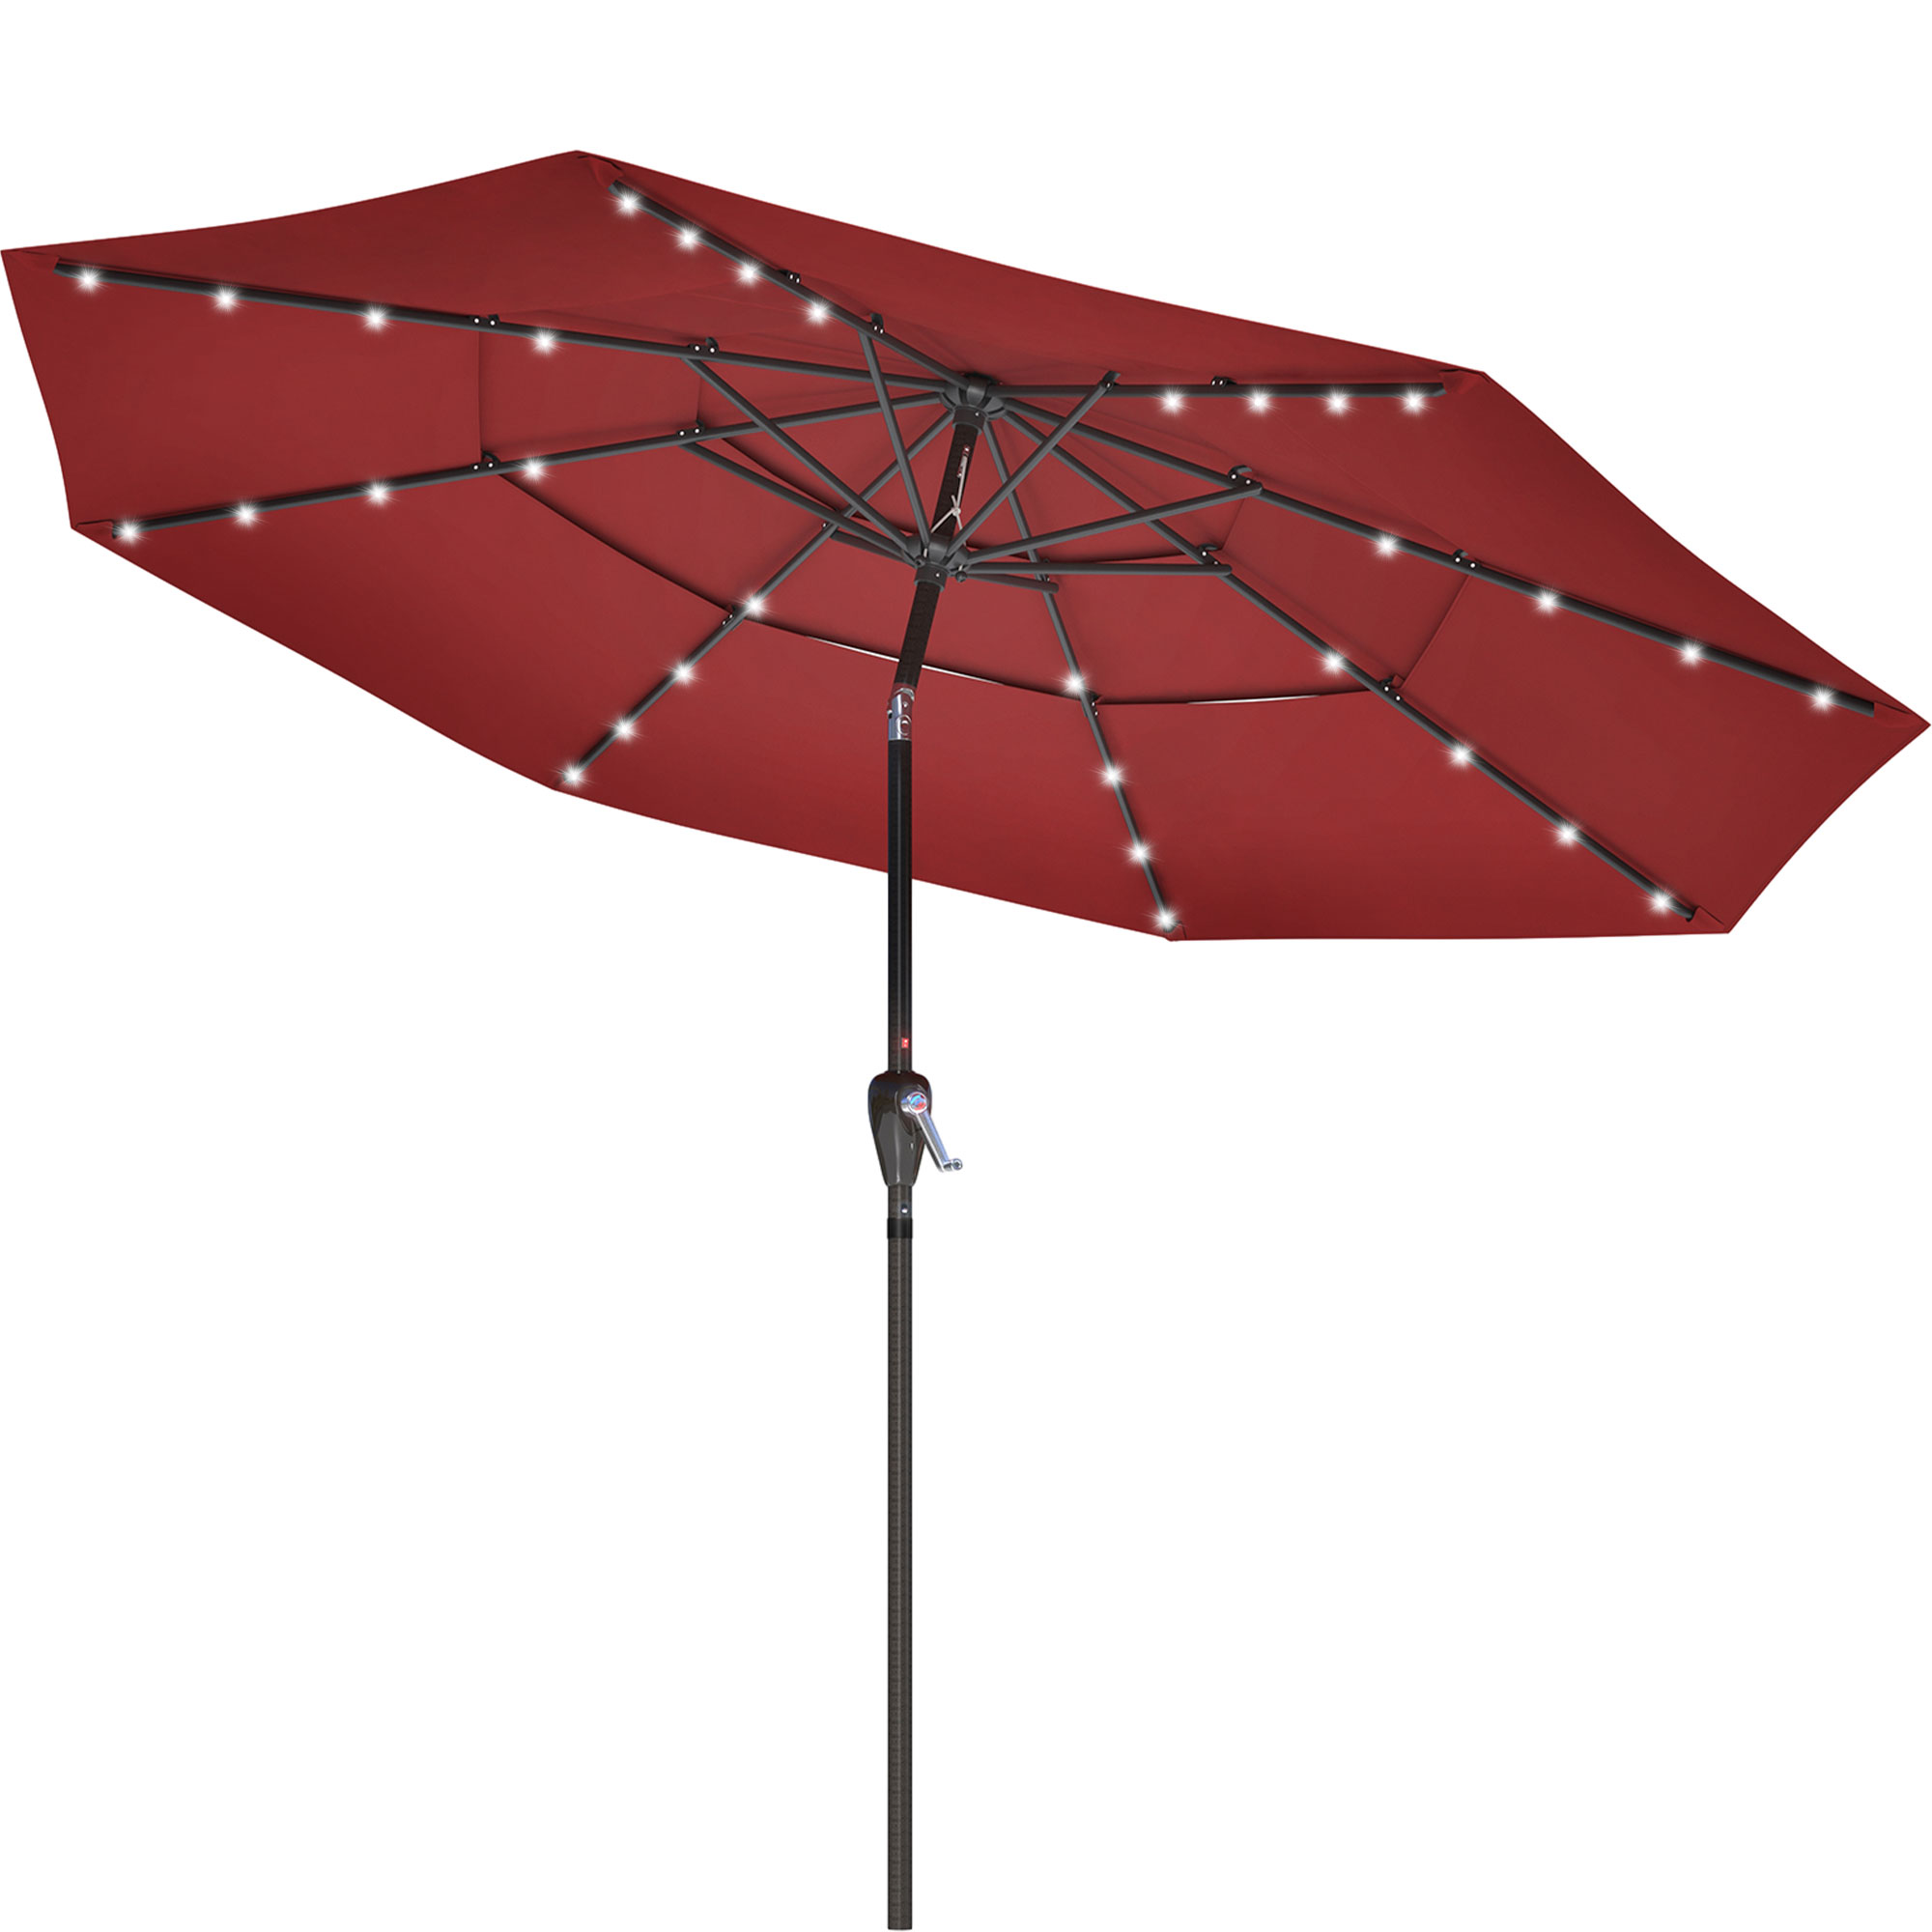 11 Ft Market Patio Umbrella with LED